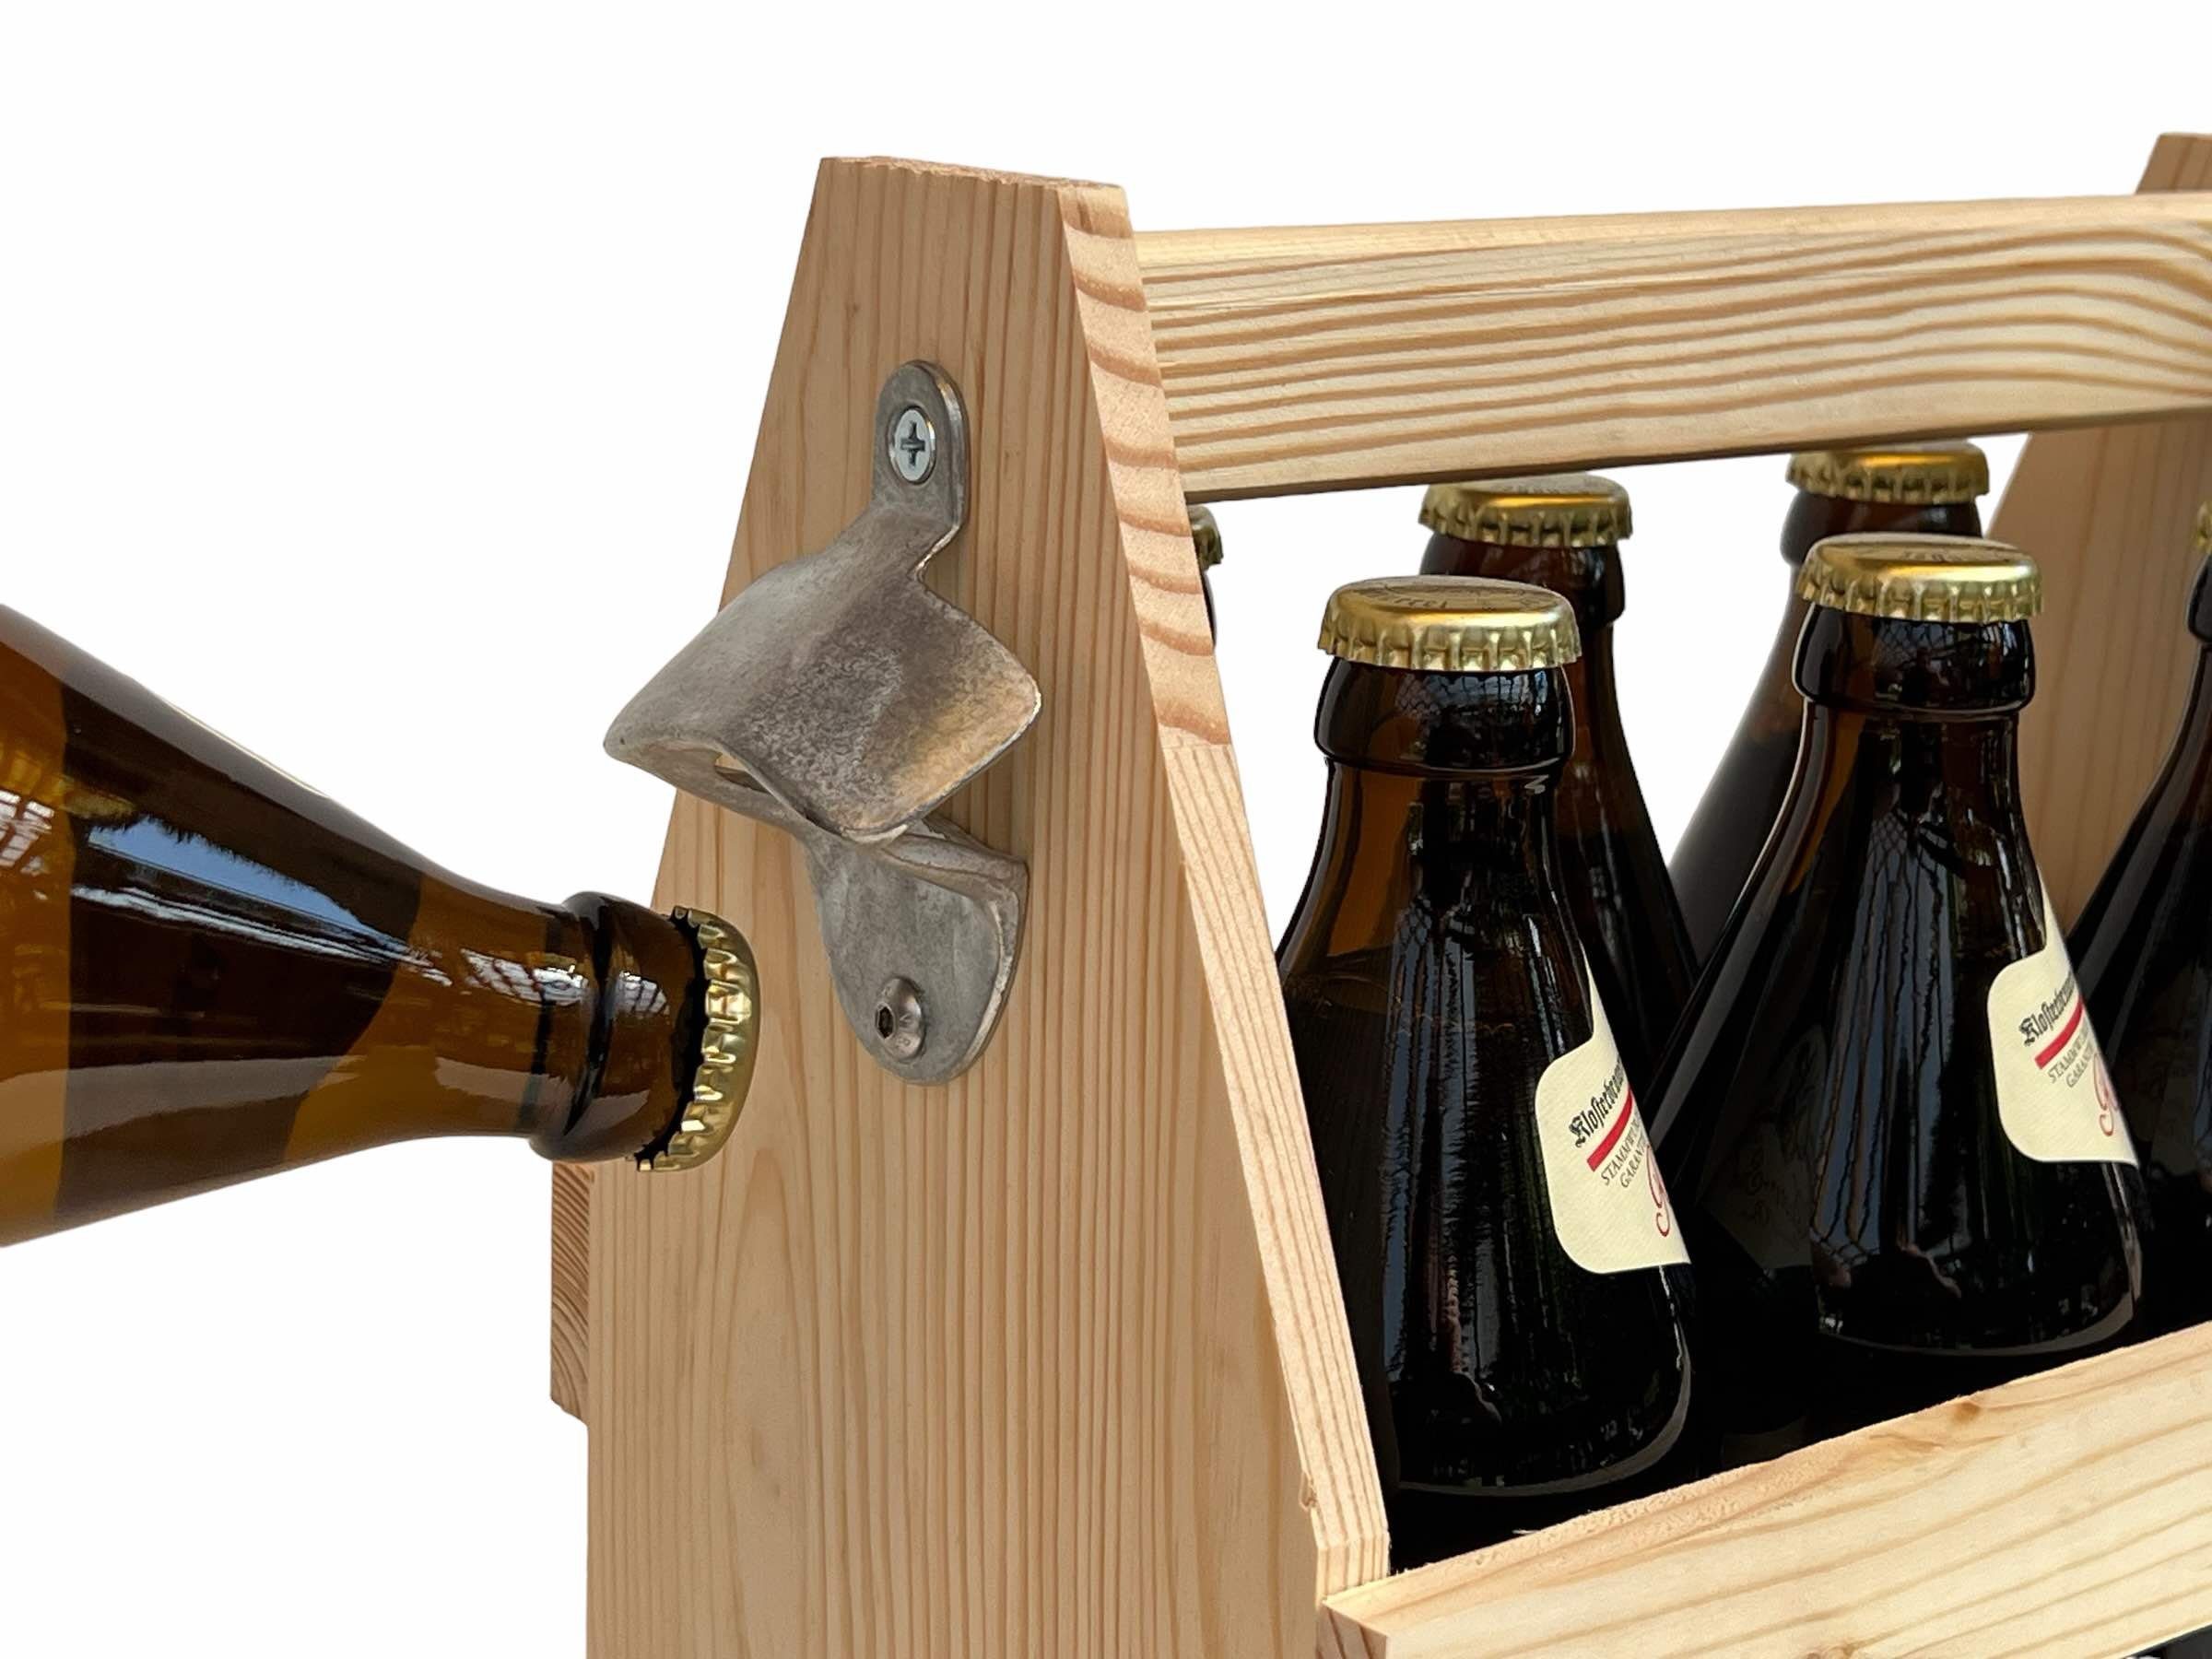 Flaschenträger Bierträger mit Flaschen DanDiBo Männerhandtasche Flaschenträger Öffner 6 Holz